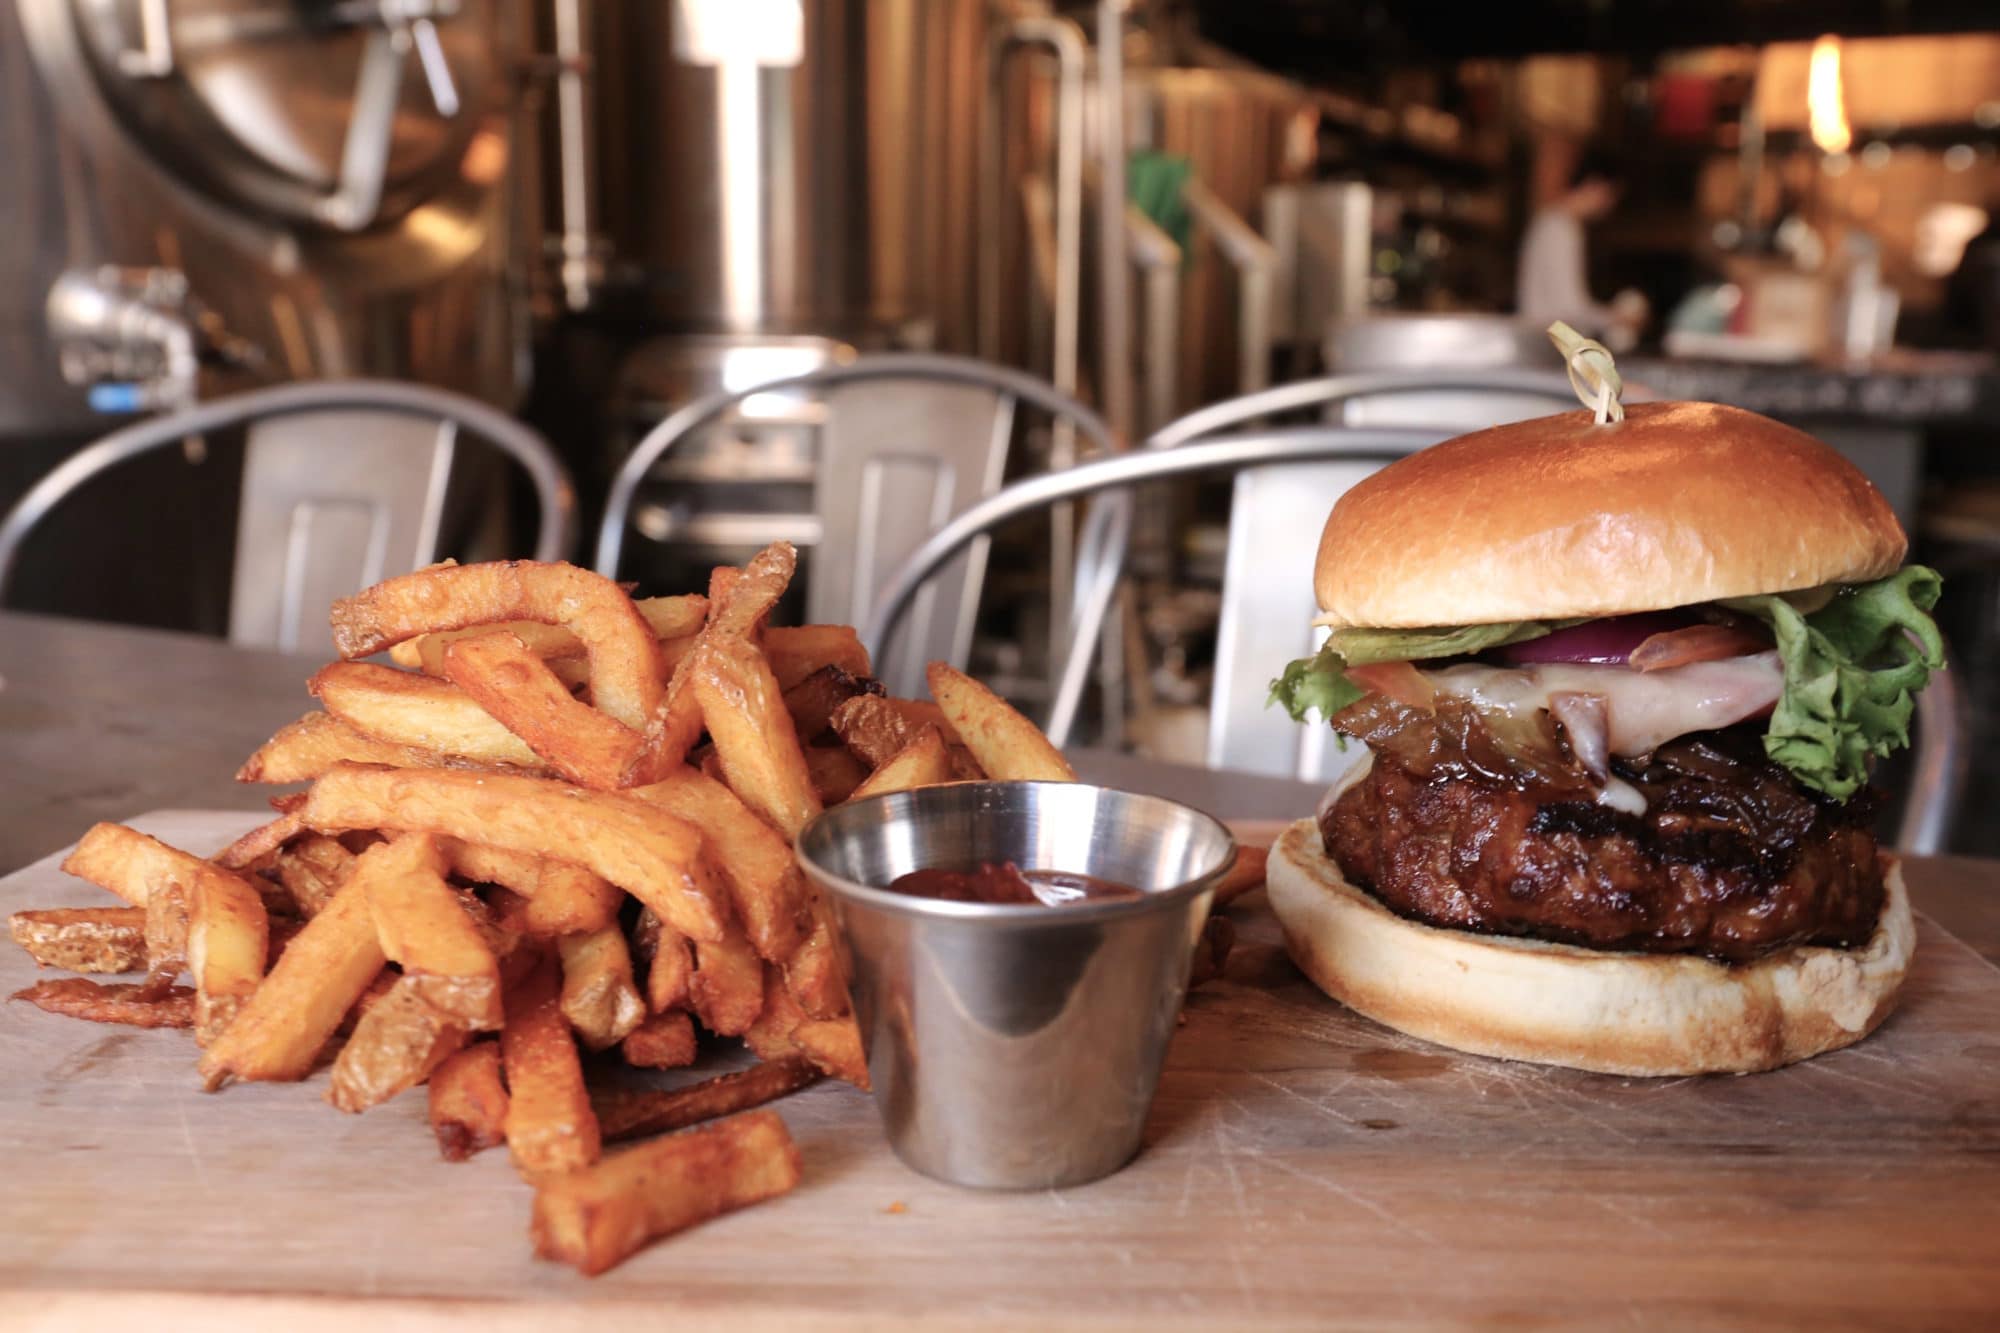 Abe Erb Waterloo's signature burger features an 8oz sirloin and chorizo patty.